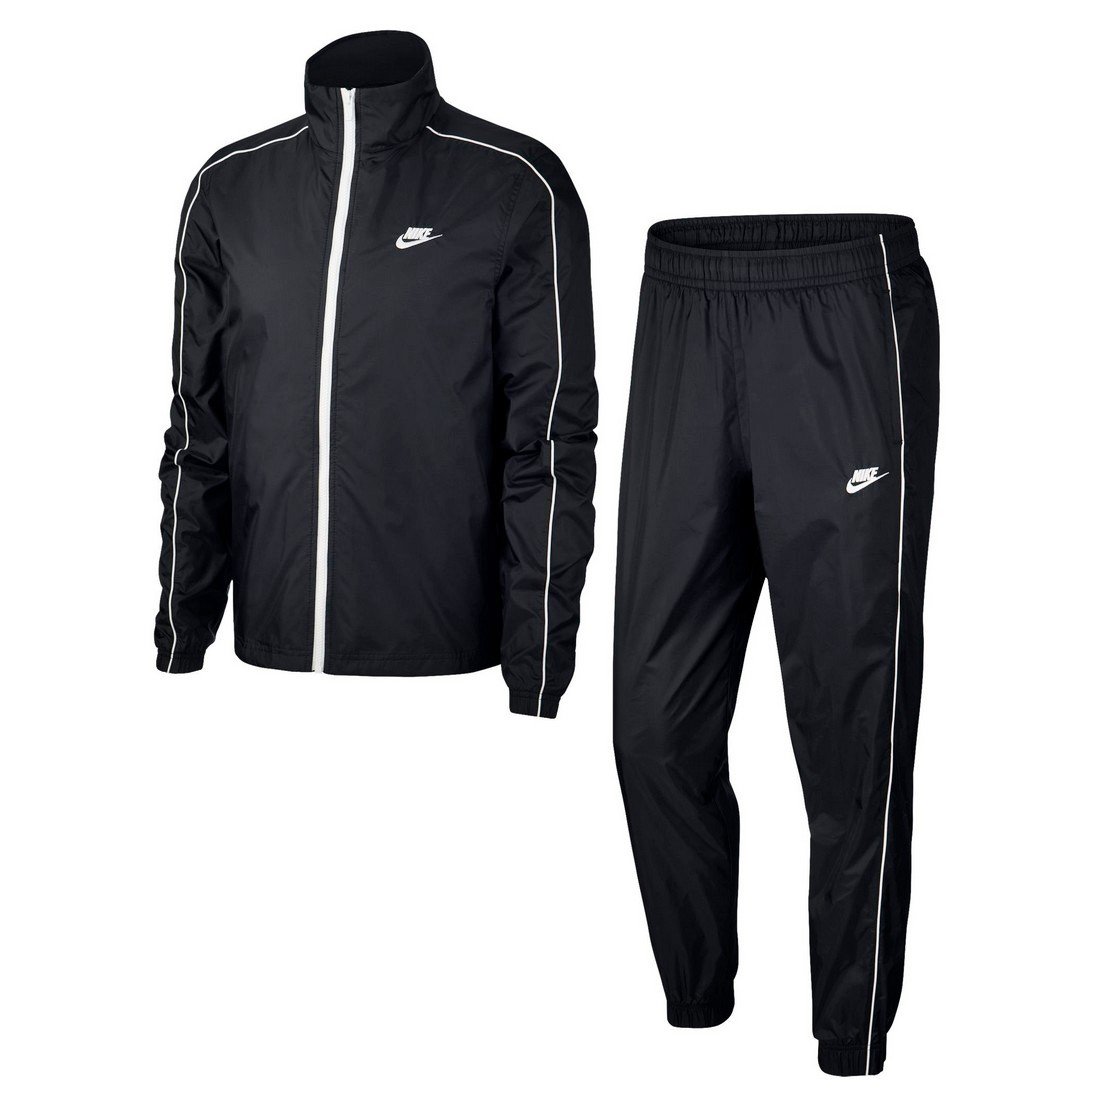 Agasalho Nike TRACK Suit Woven Preto